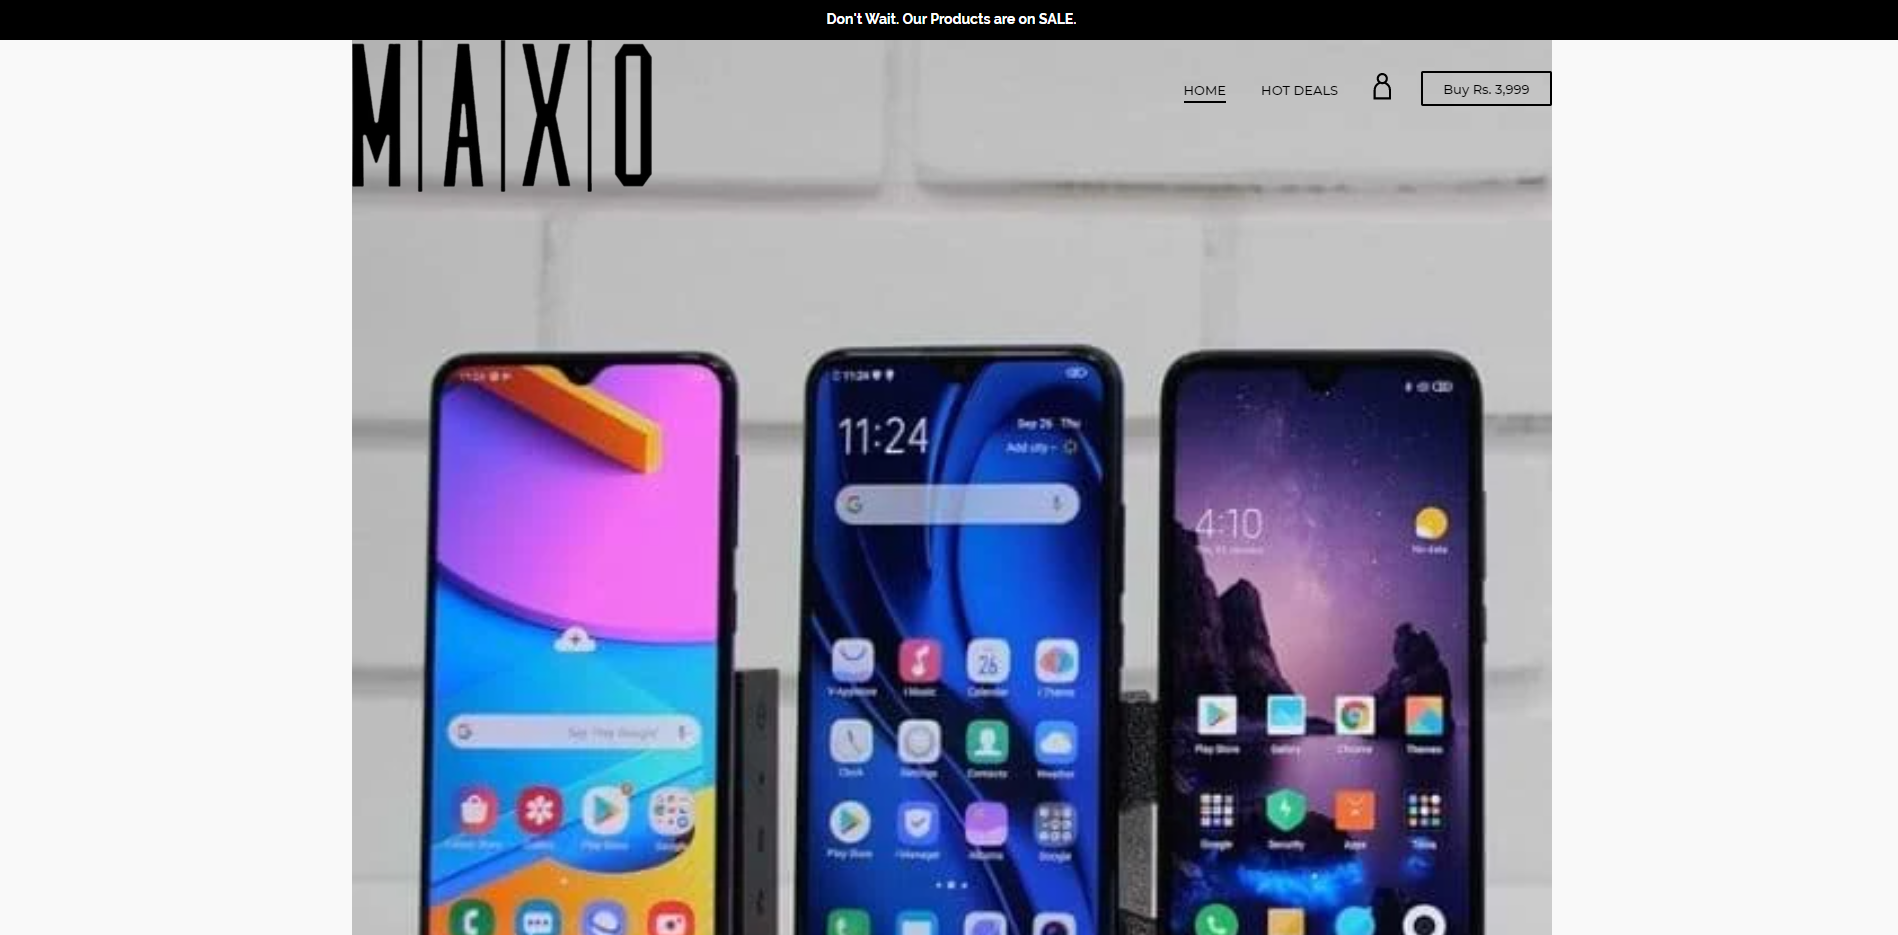 maxo phones banner image fake